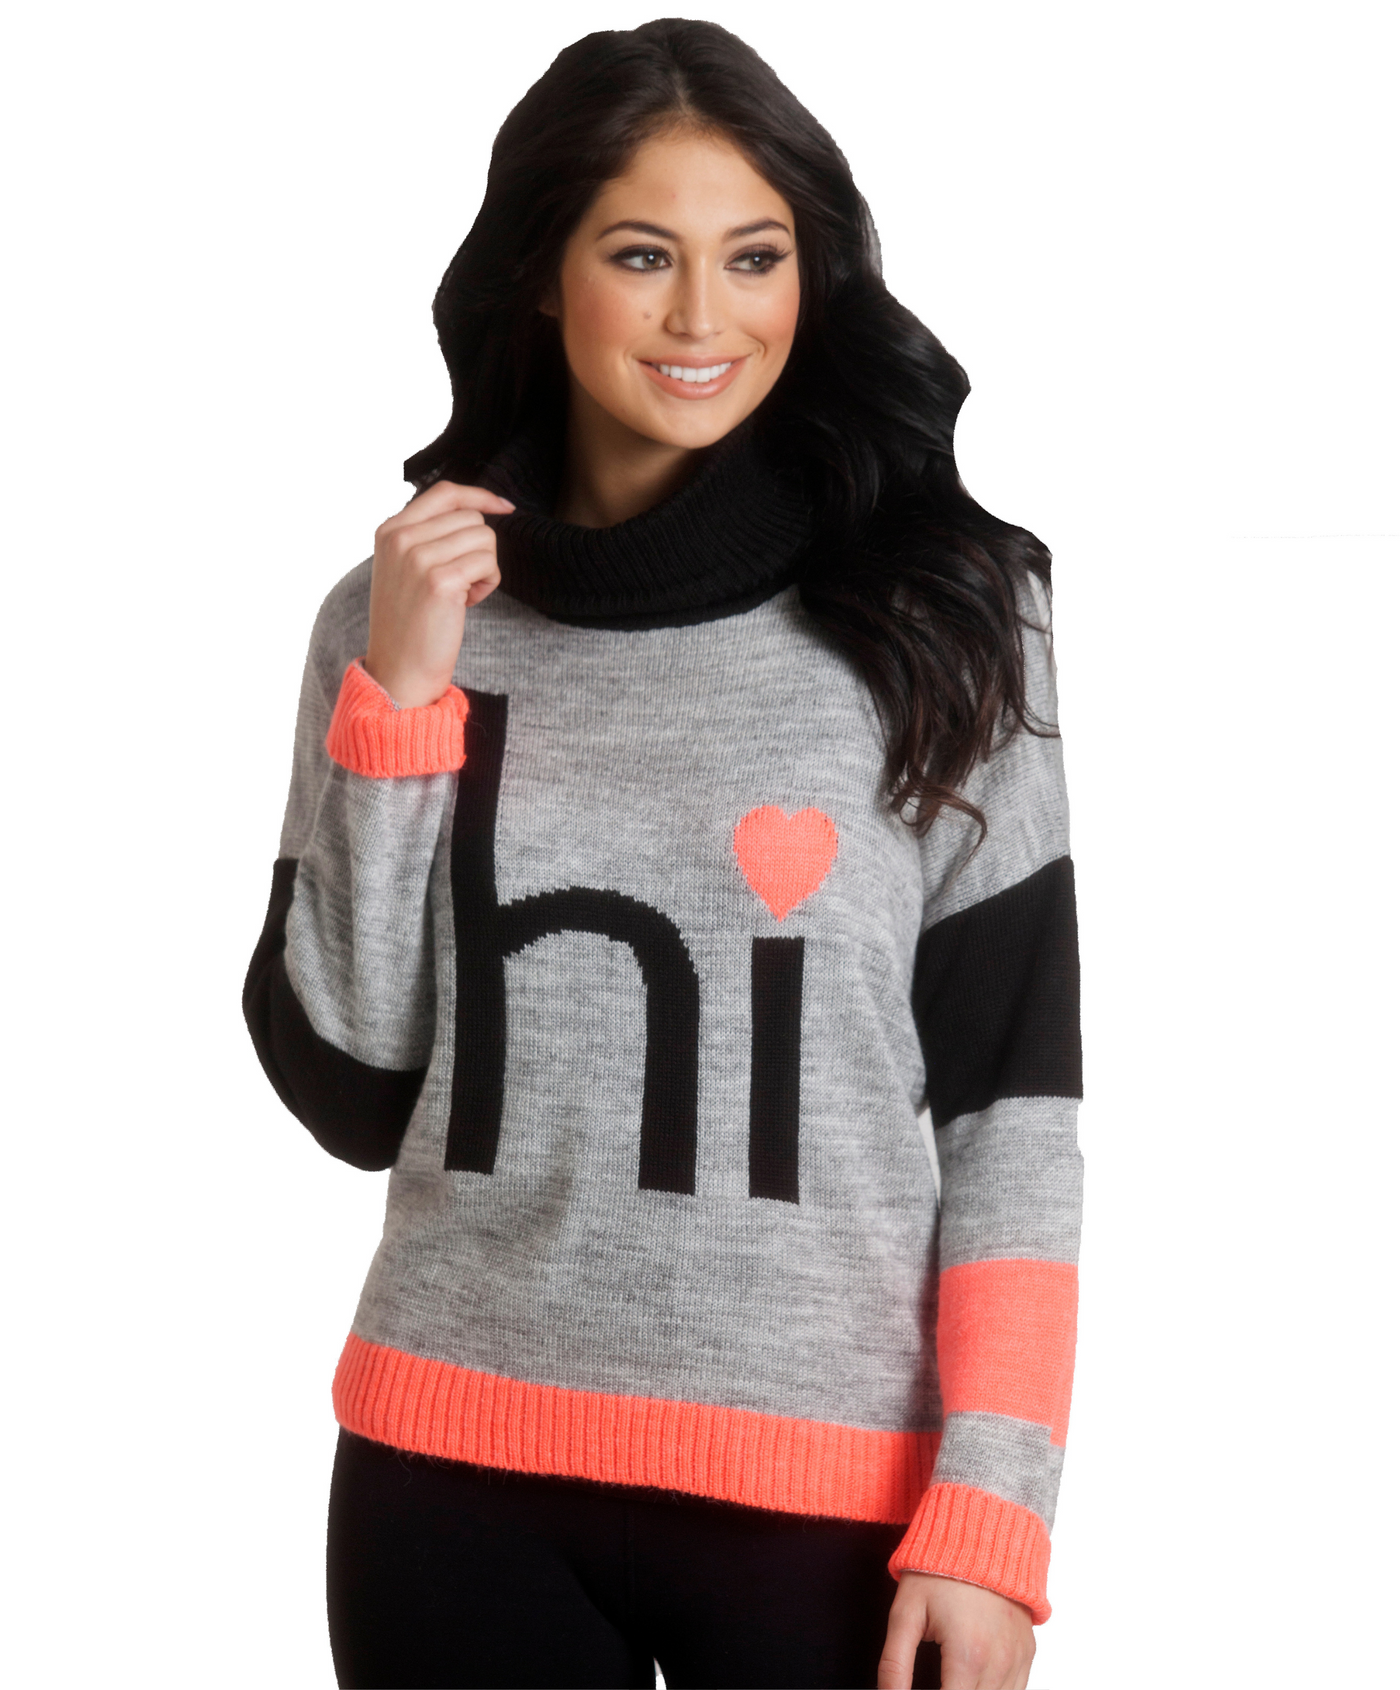 "Hi" Cowl Neck Sweater